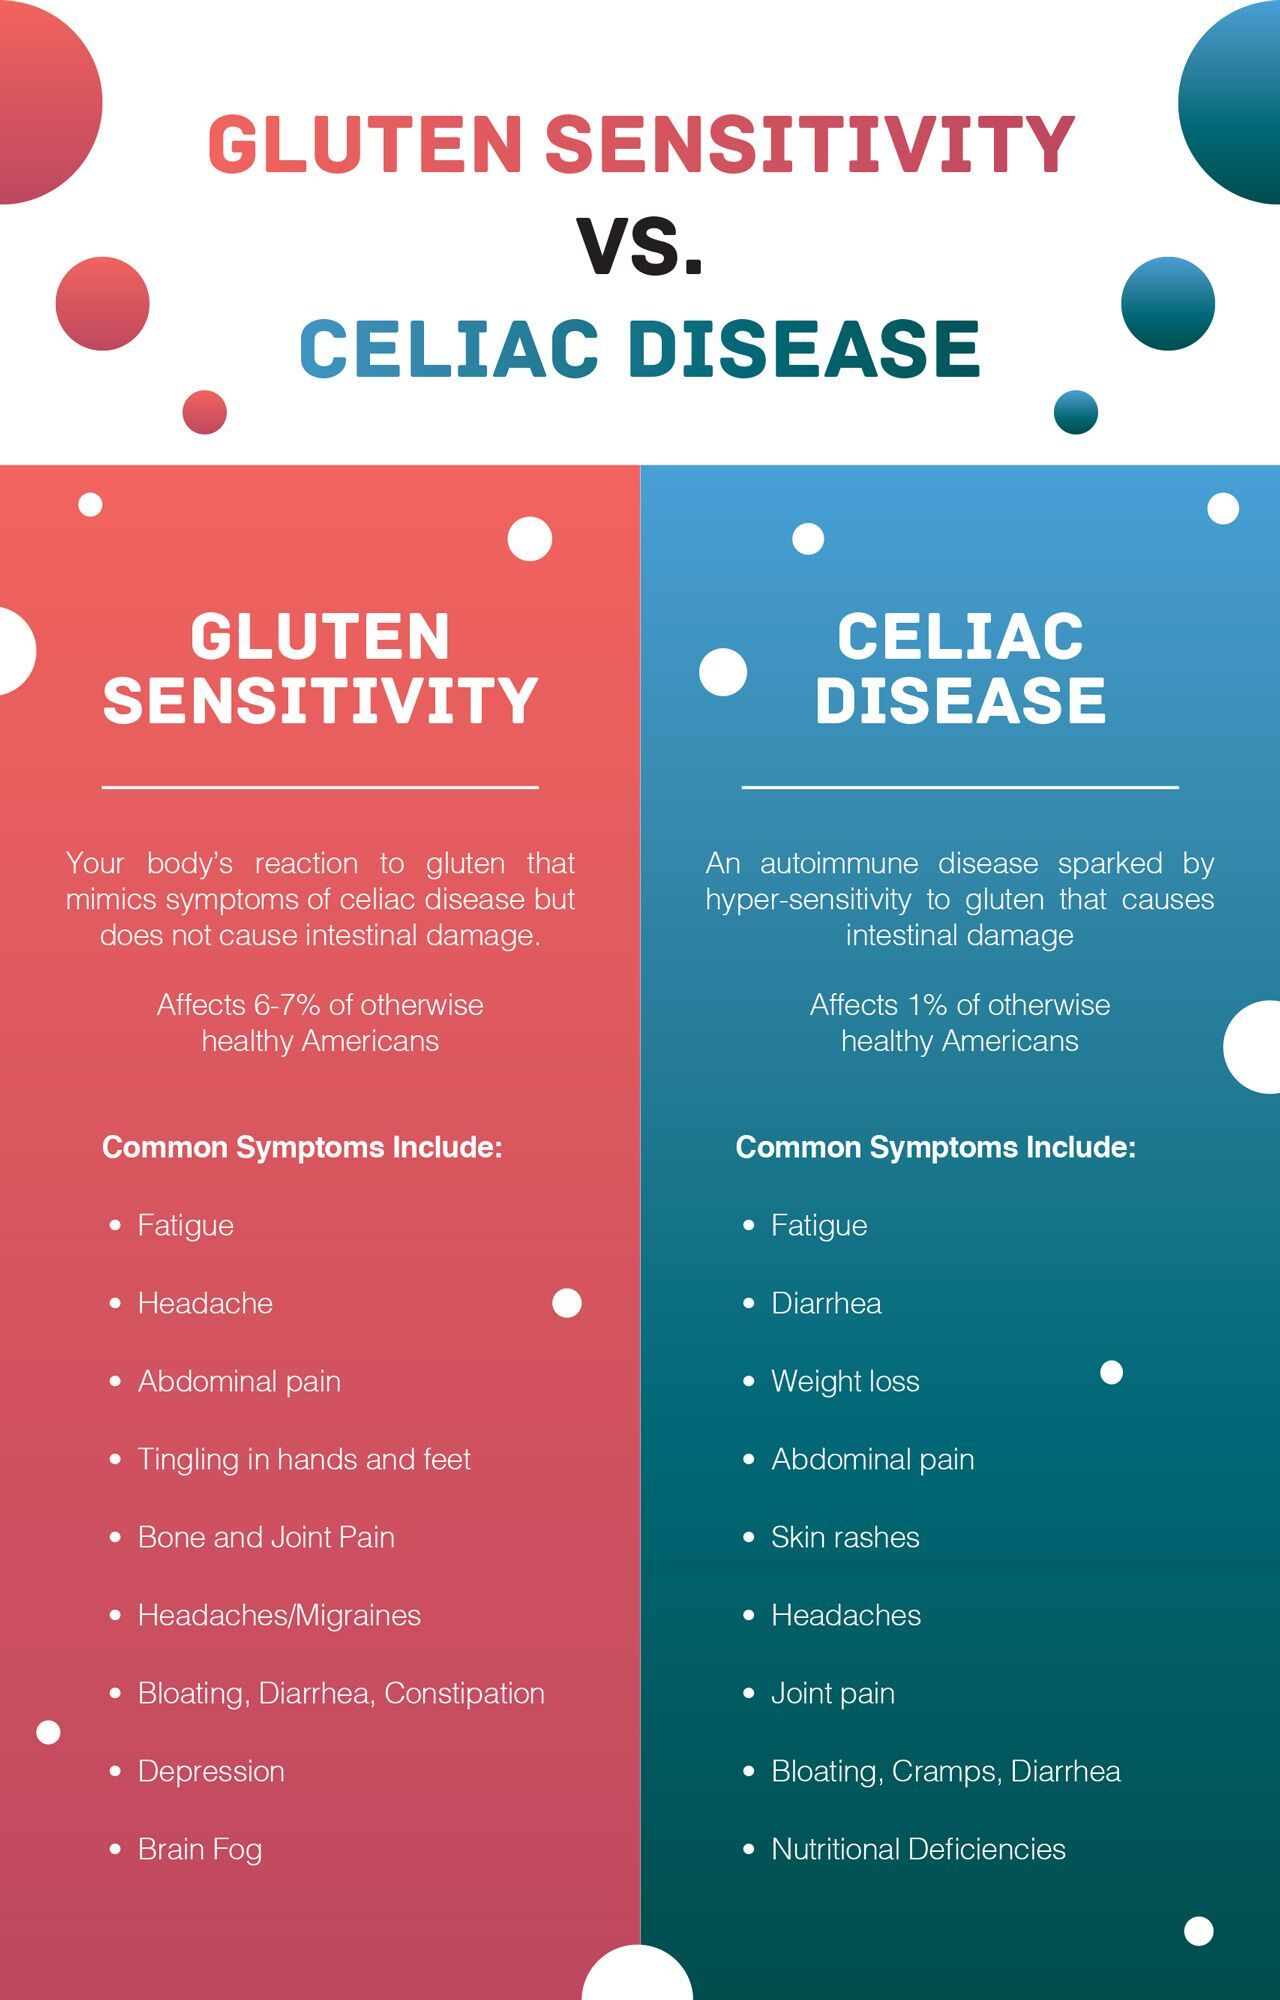 Gluten Sensitivity vs. Celiac Disease: Get the Facts Straight